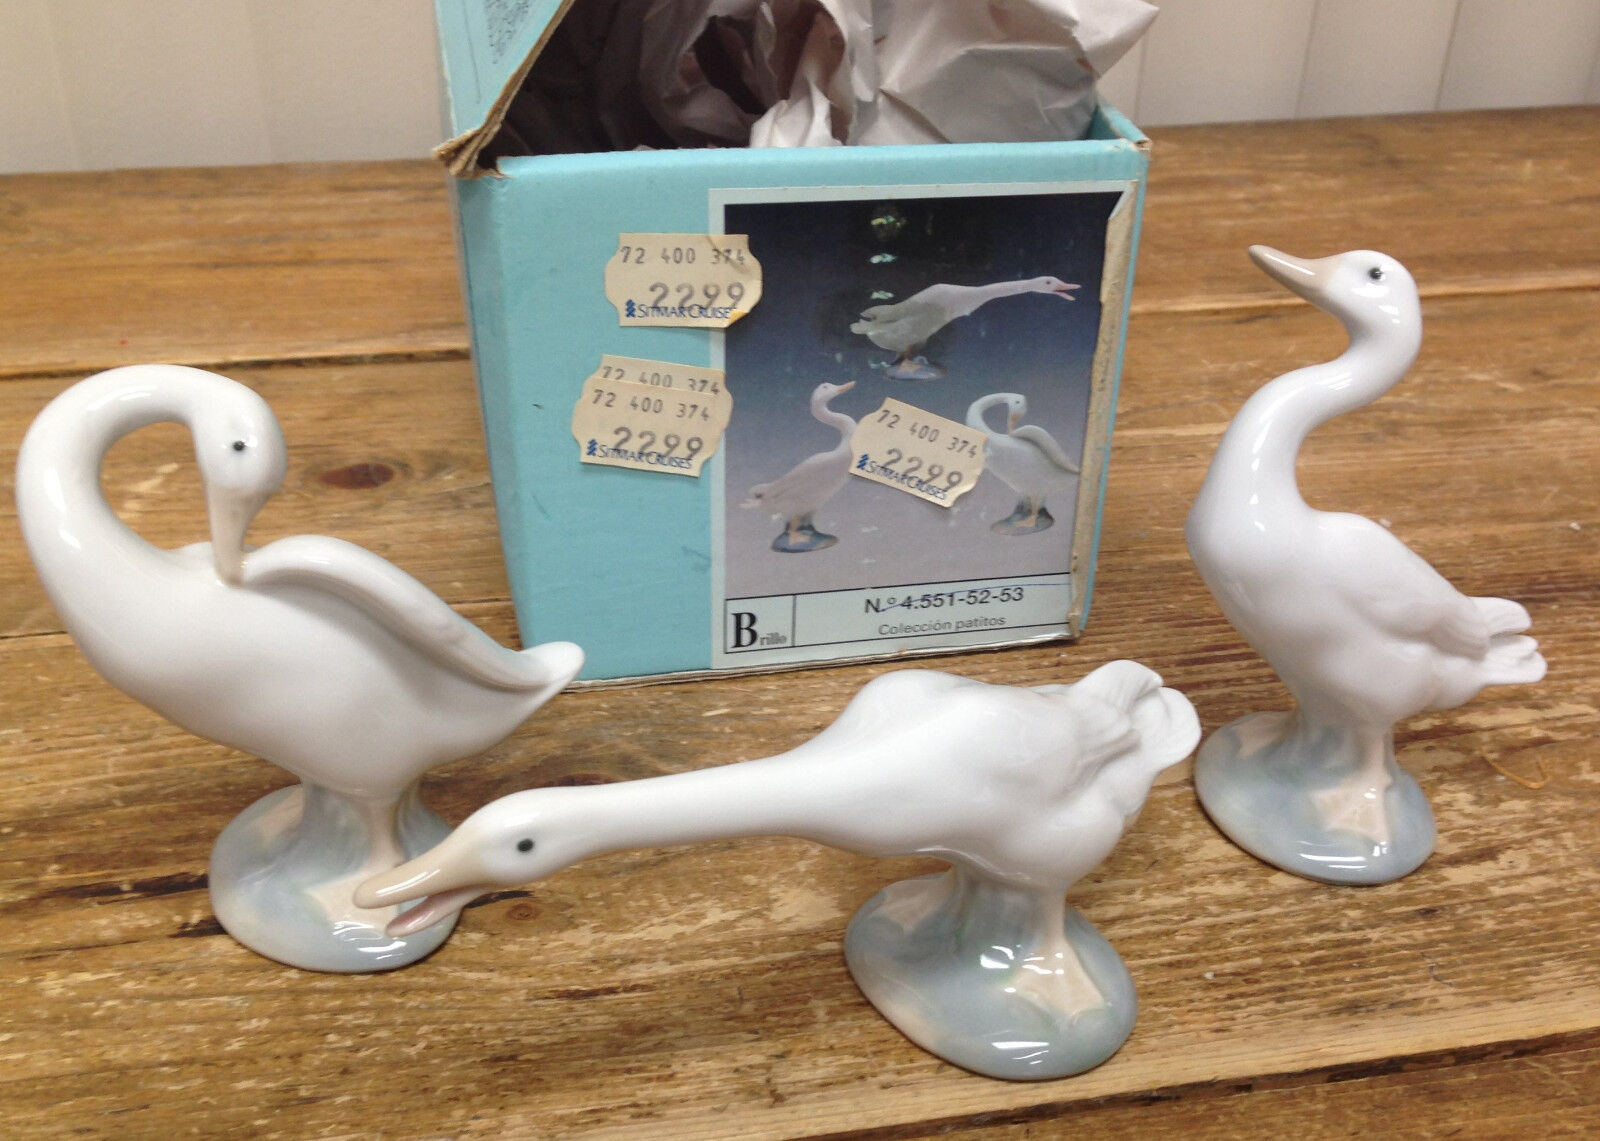 LLadro Spain Figurines Boxed Set Ducklings Ducks 4551 4552 4553 Patitos Glossy